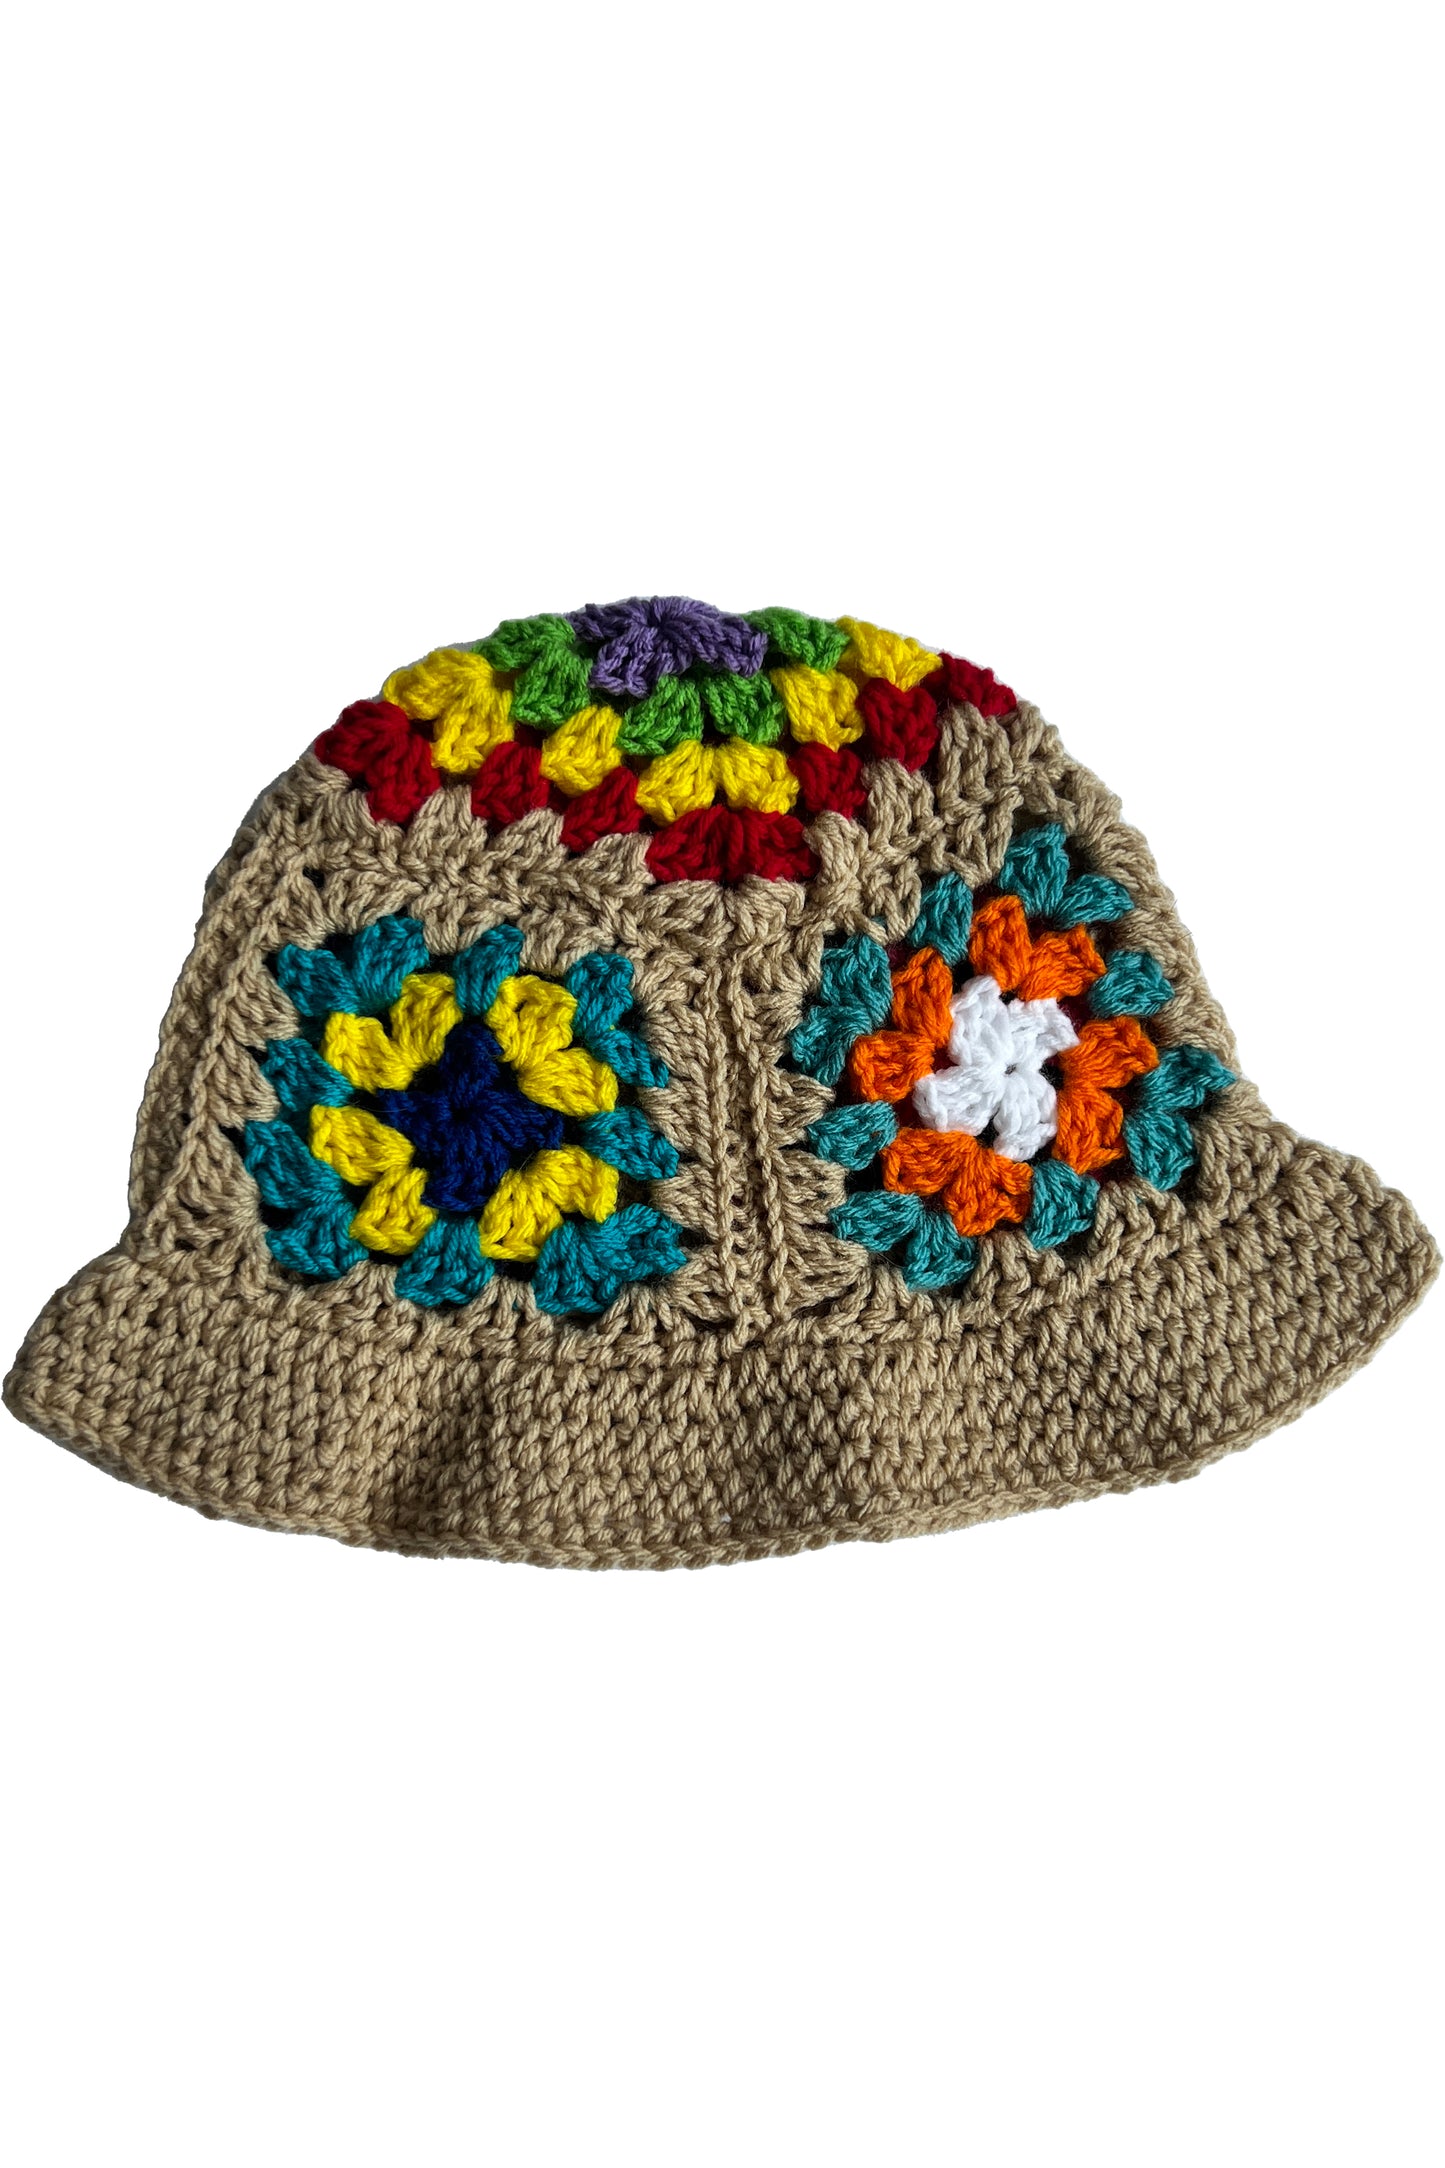 Granny Square Crochet Bucket Hat